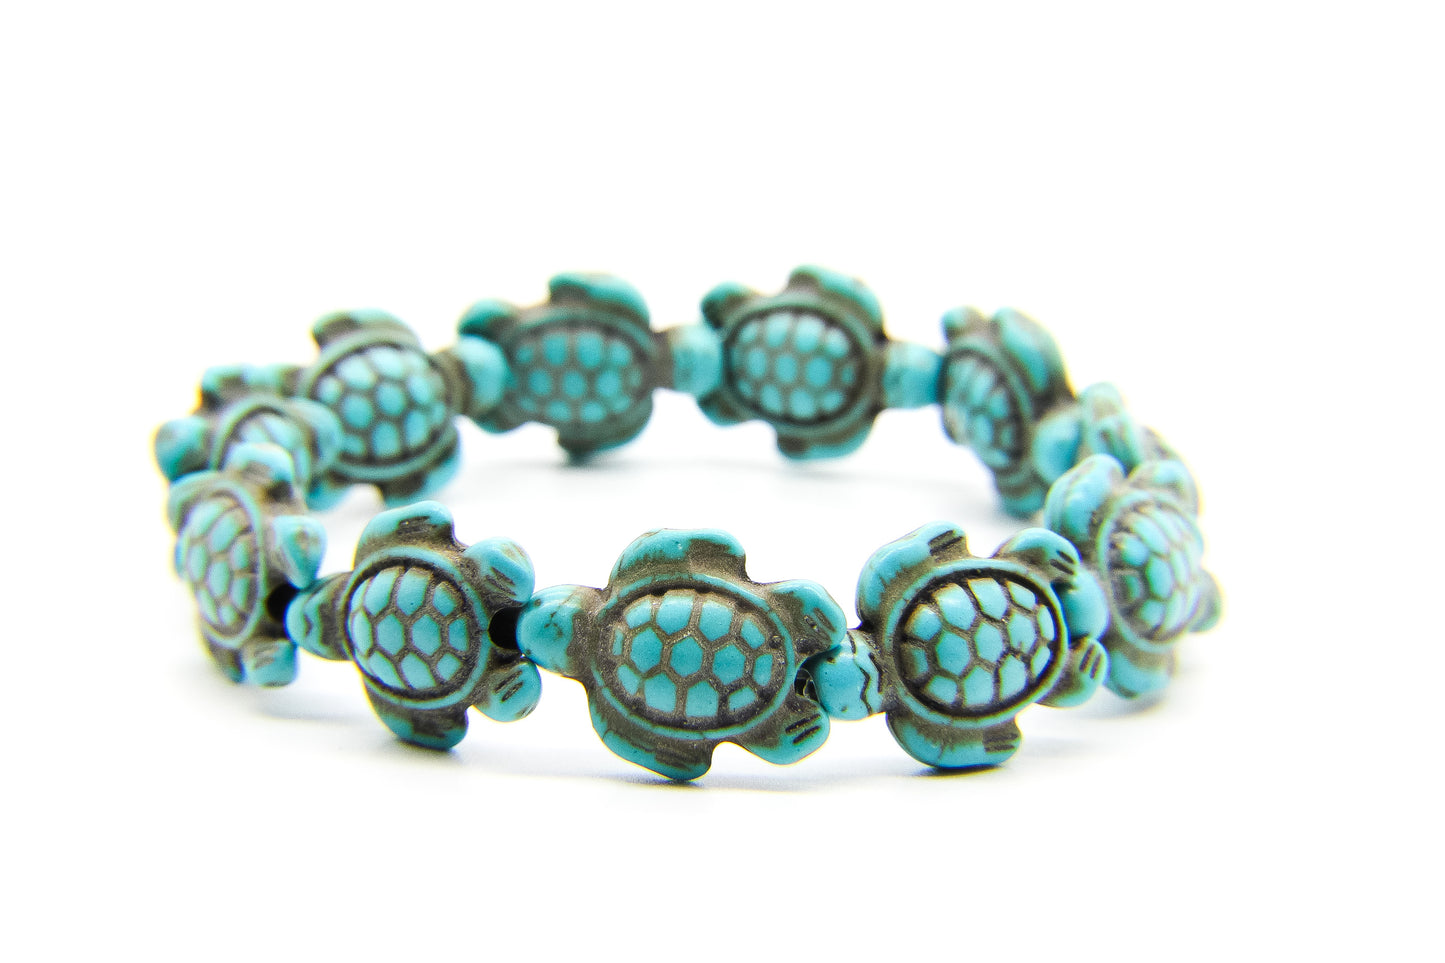 Bracelet of turquoise stone sea turtles